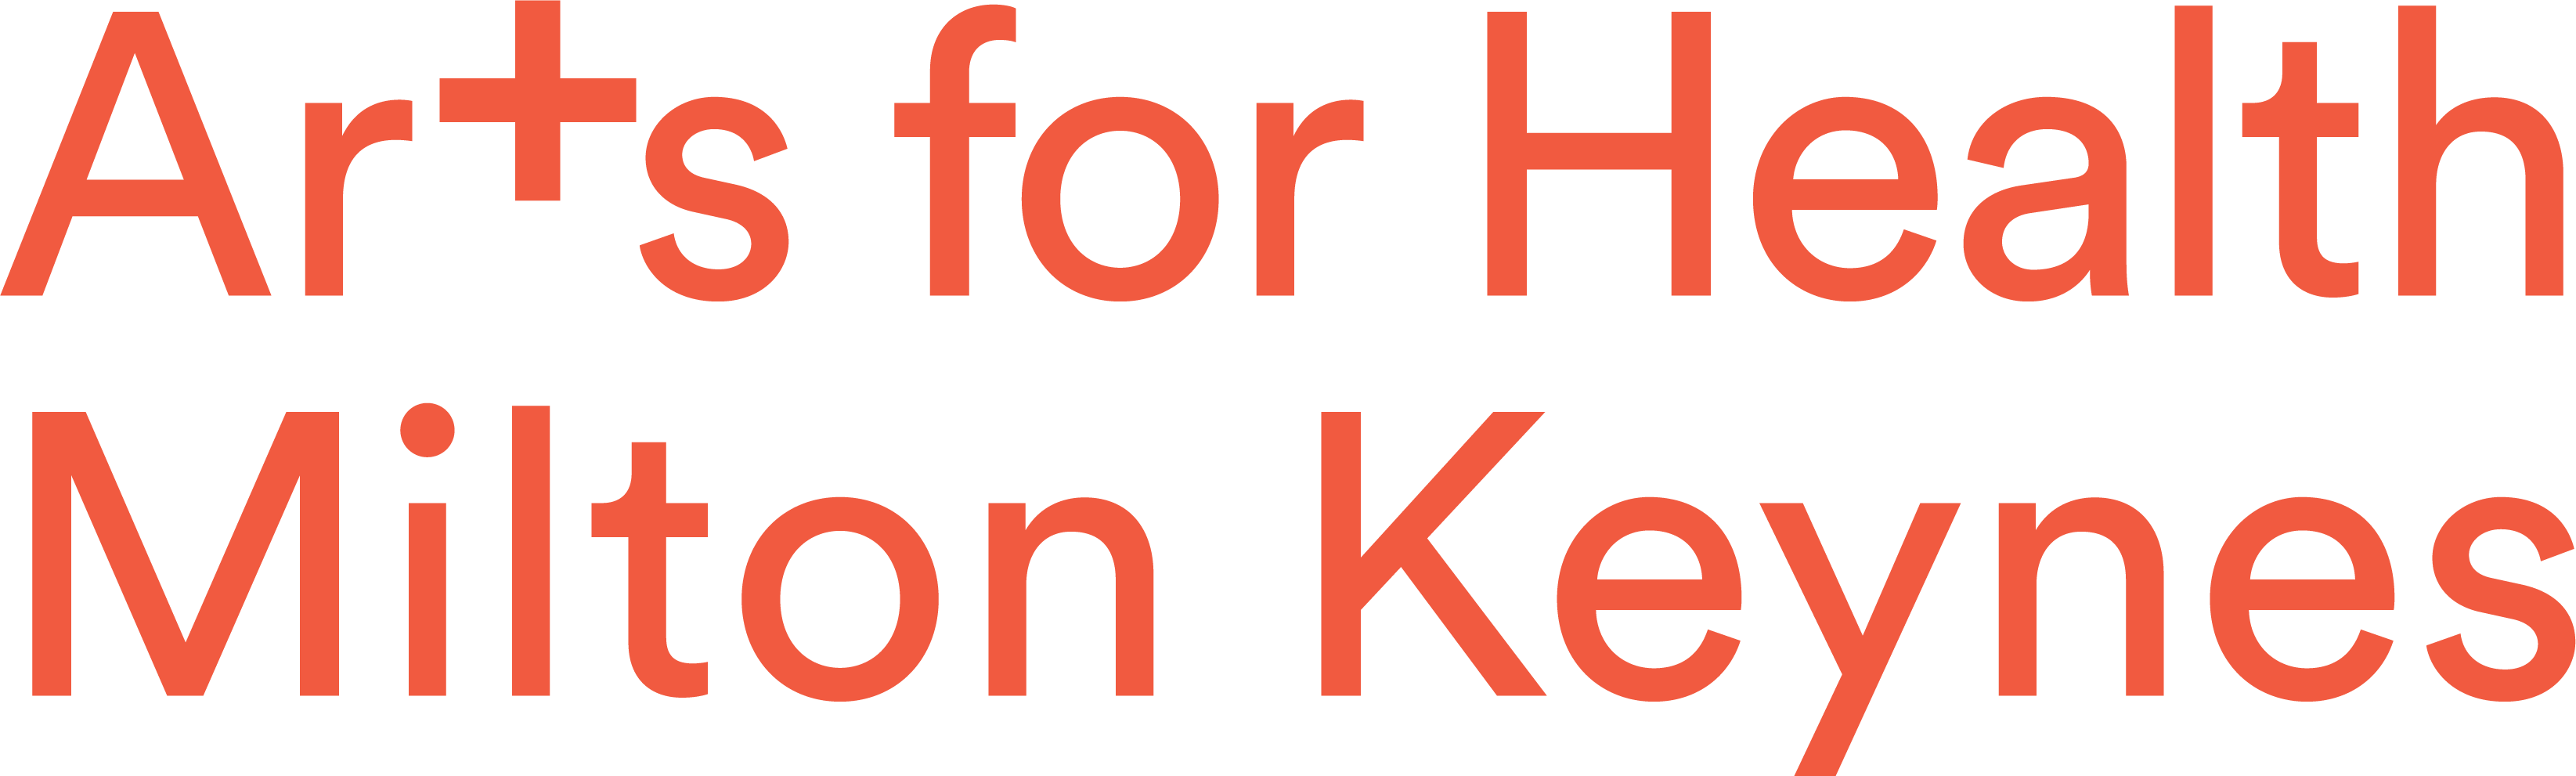 Arts for Health Milton Keynes